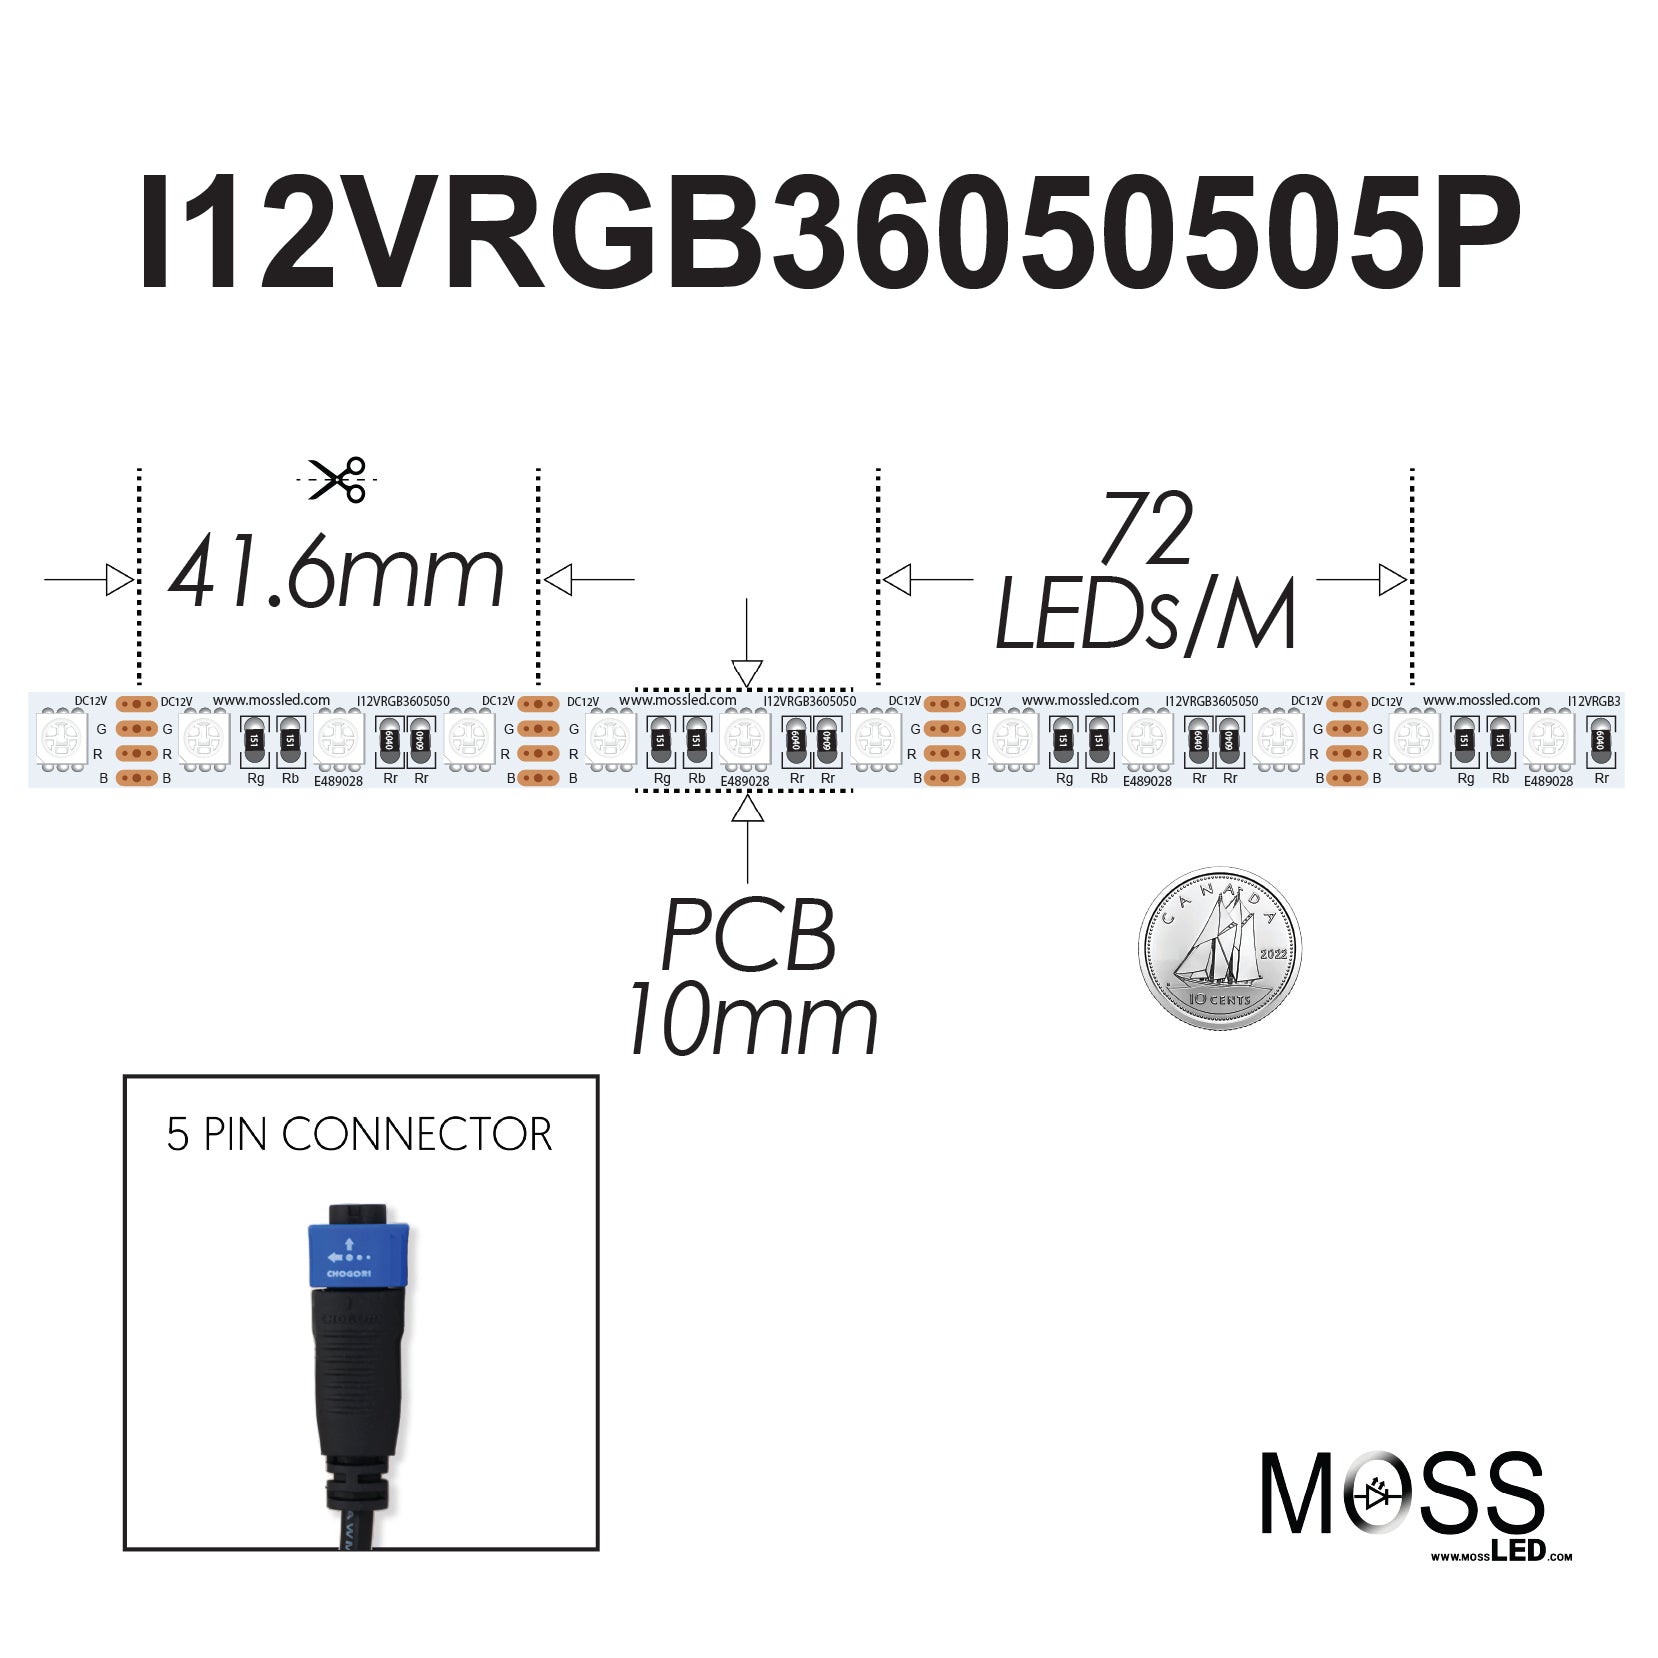 WS2812B LED Strip: Dimensions, Specs & More